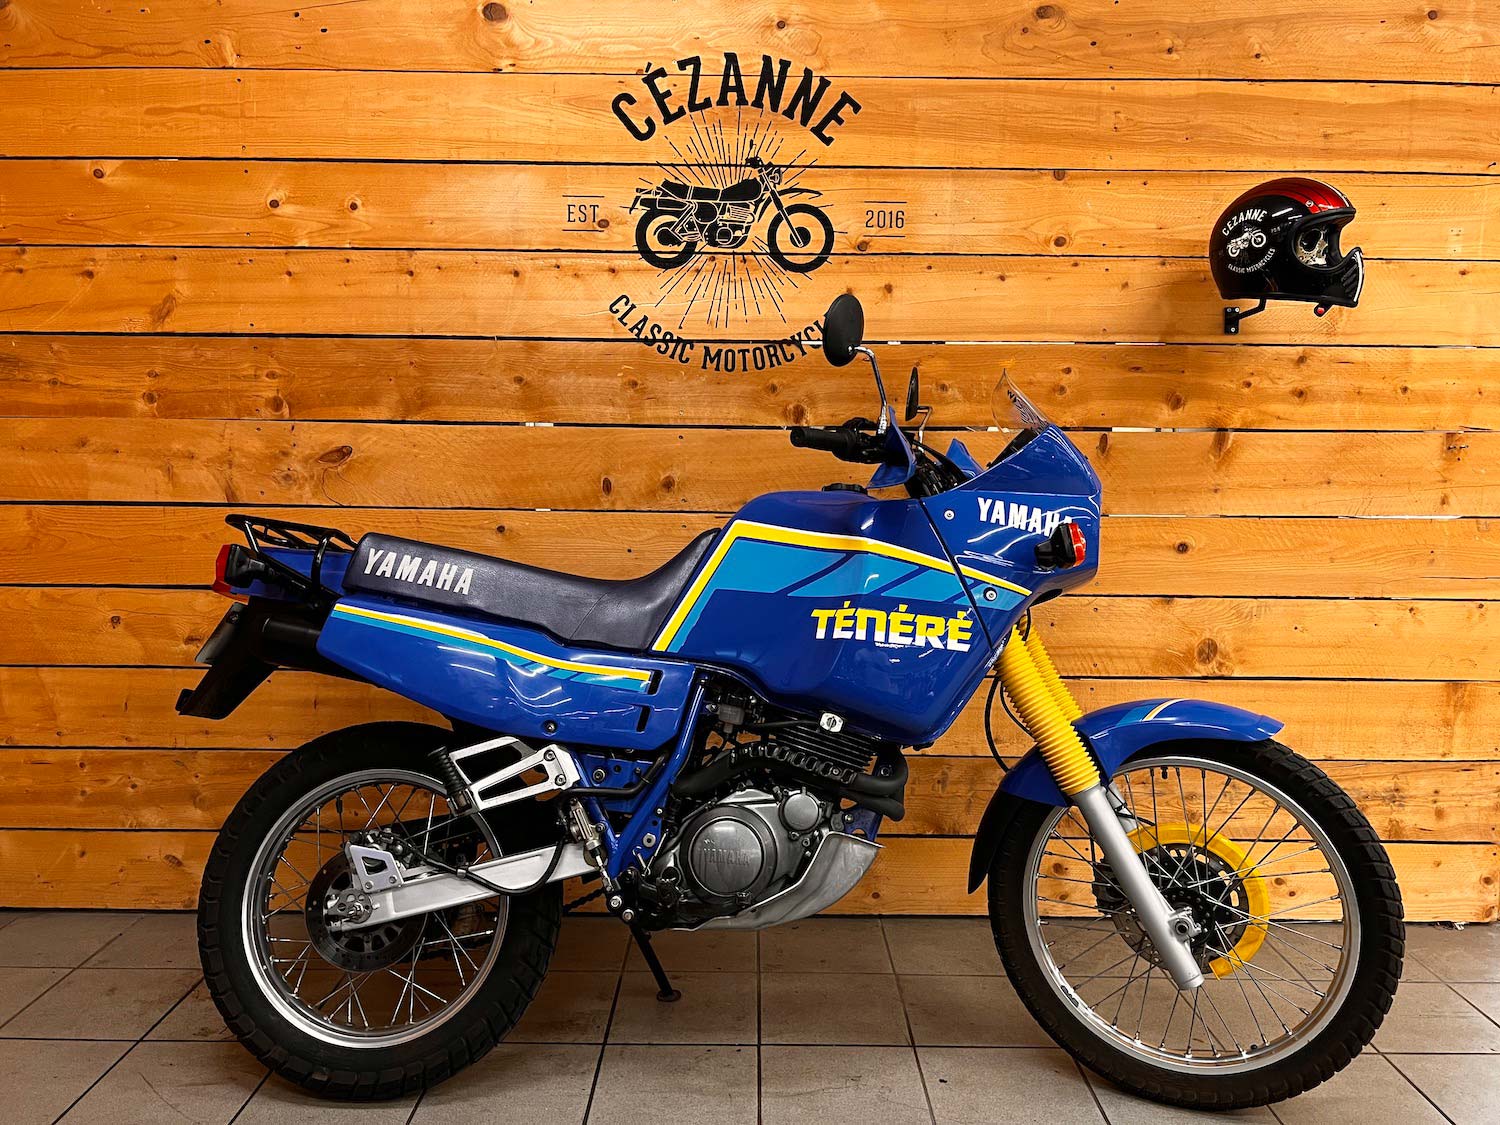 Yamaha_xt600z_Cezanne_classic_motorcycle-158.jpg